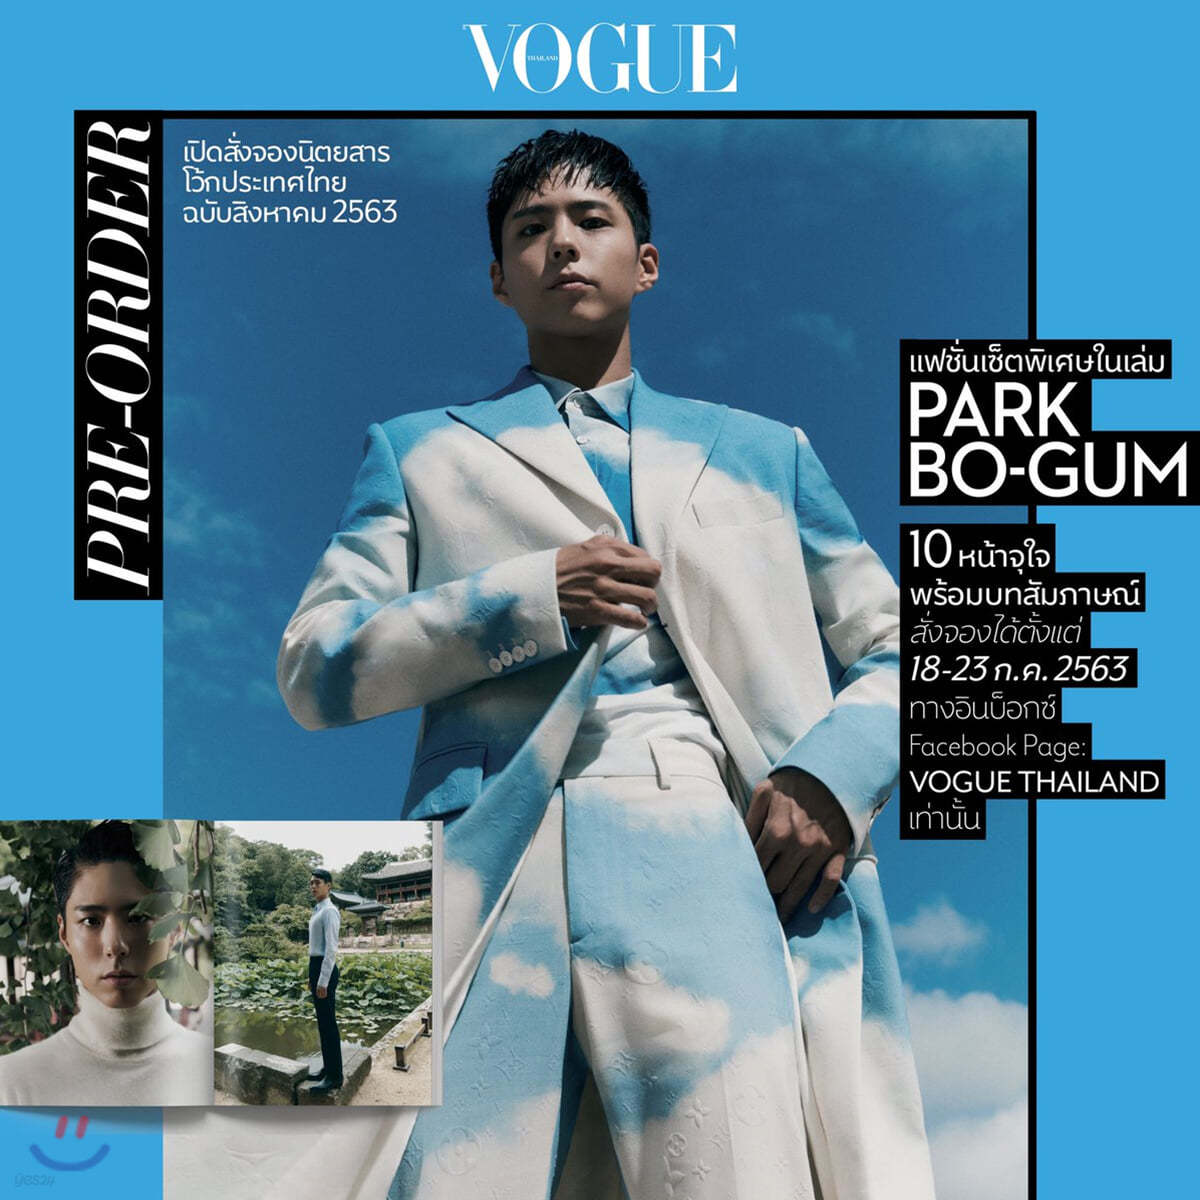 Vogue Thailand 2020년 8월 : 보그 태국판 (박보검 커버)